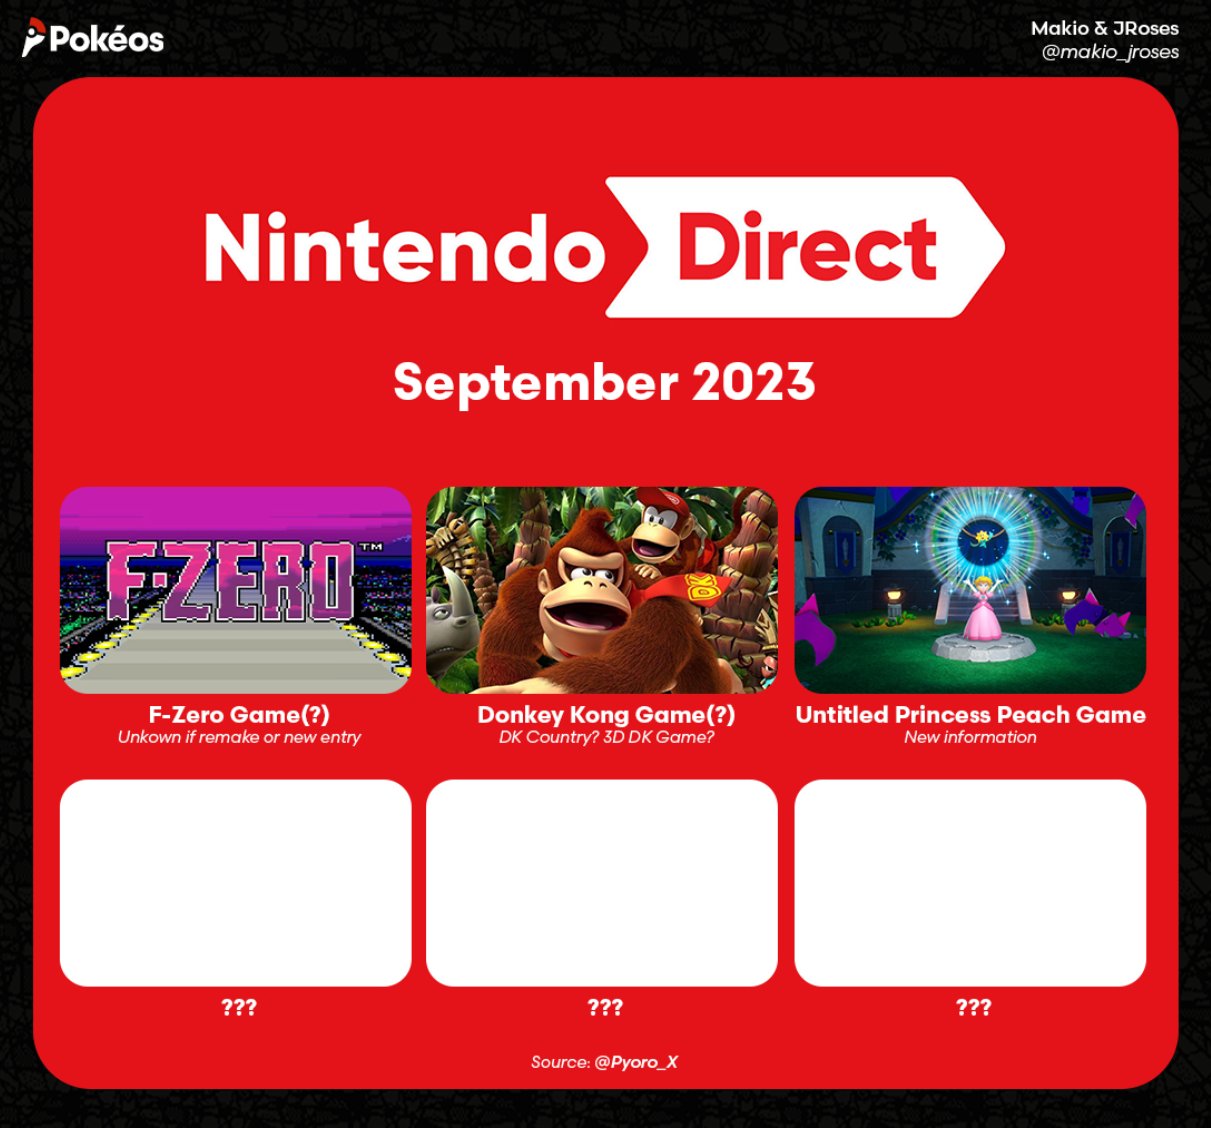 2 New HUGE Games Leaked For Next Week's Nintendo Direct?! 